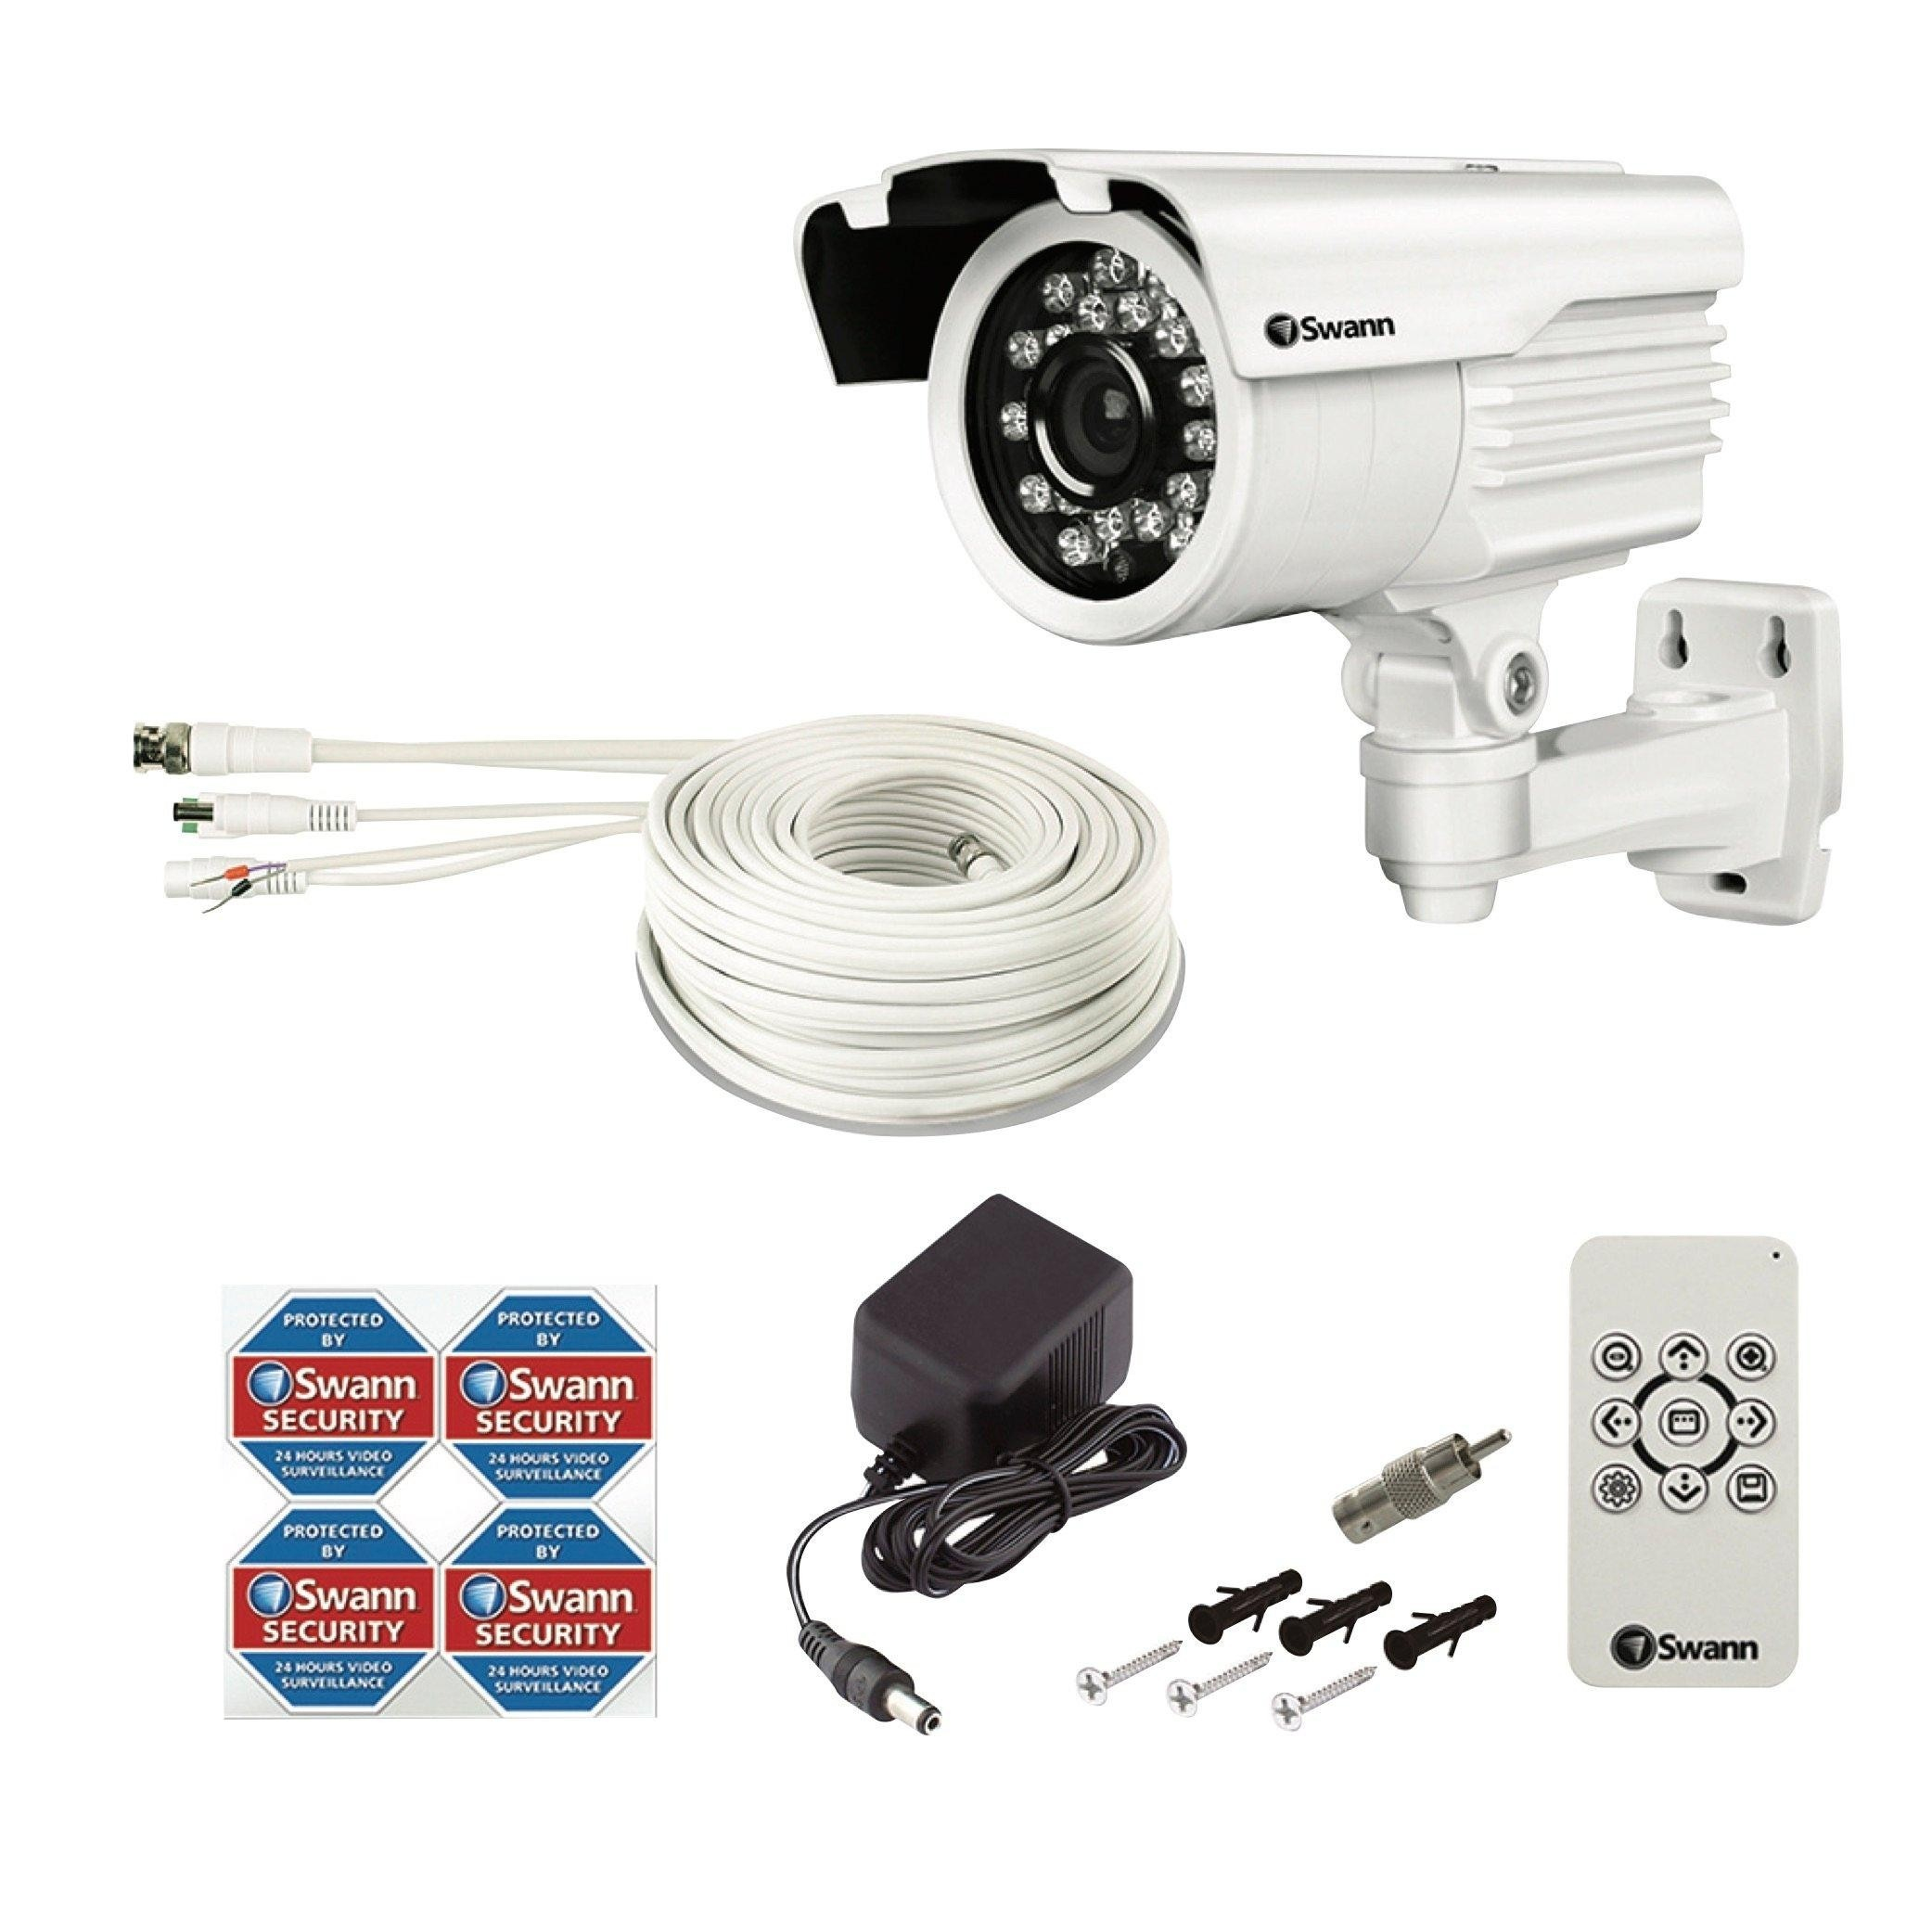 Swann Camera Wiring Diagram - Trusted Wiring Diagram Online - Swann Security Camera Wiring Diagram